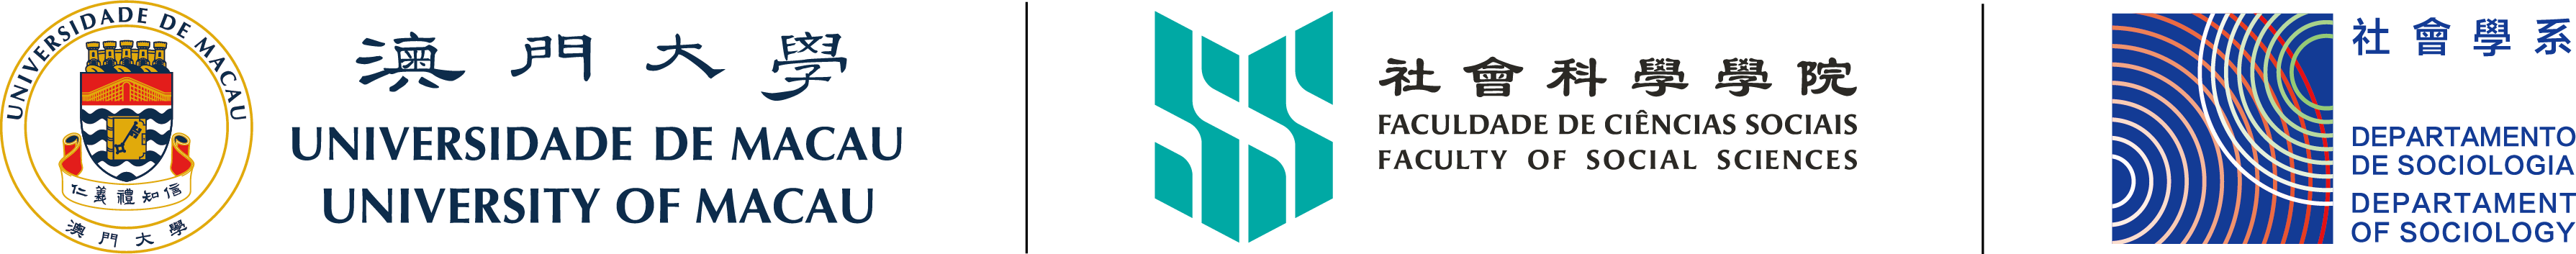 Department of Sociology, Faculty of Social Sciences Logo